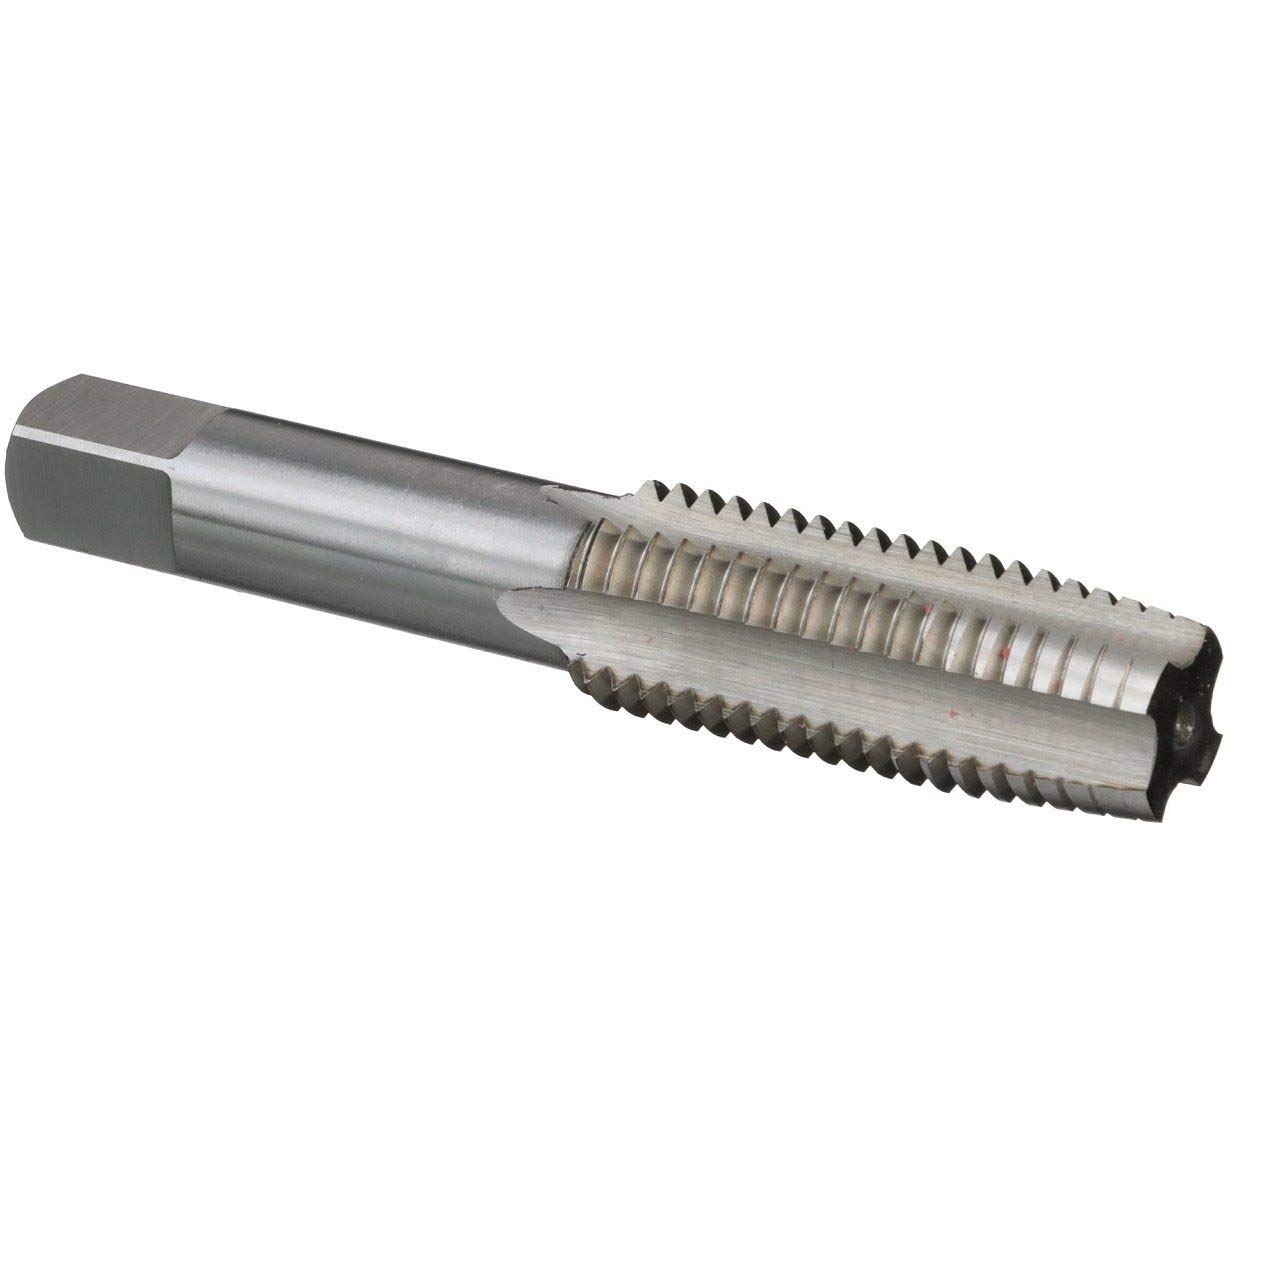 Drill America 1516-40 UNS High Speed Steel Plug Tap Pack of 1並行輸入品